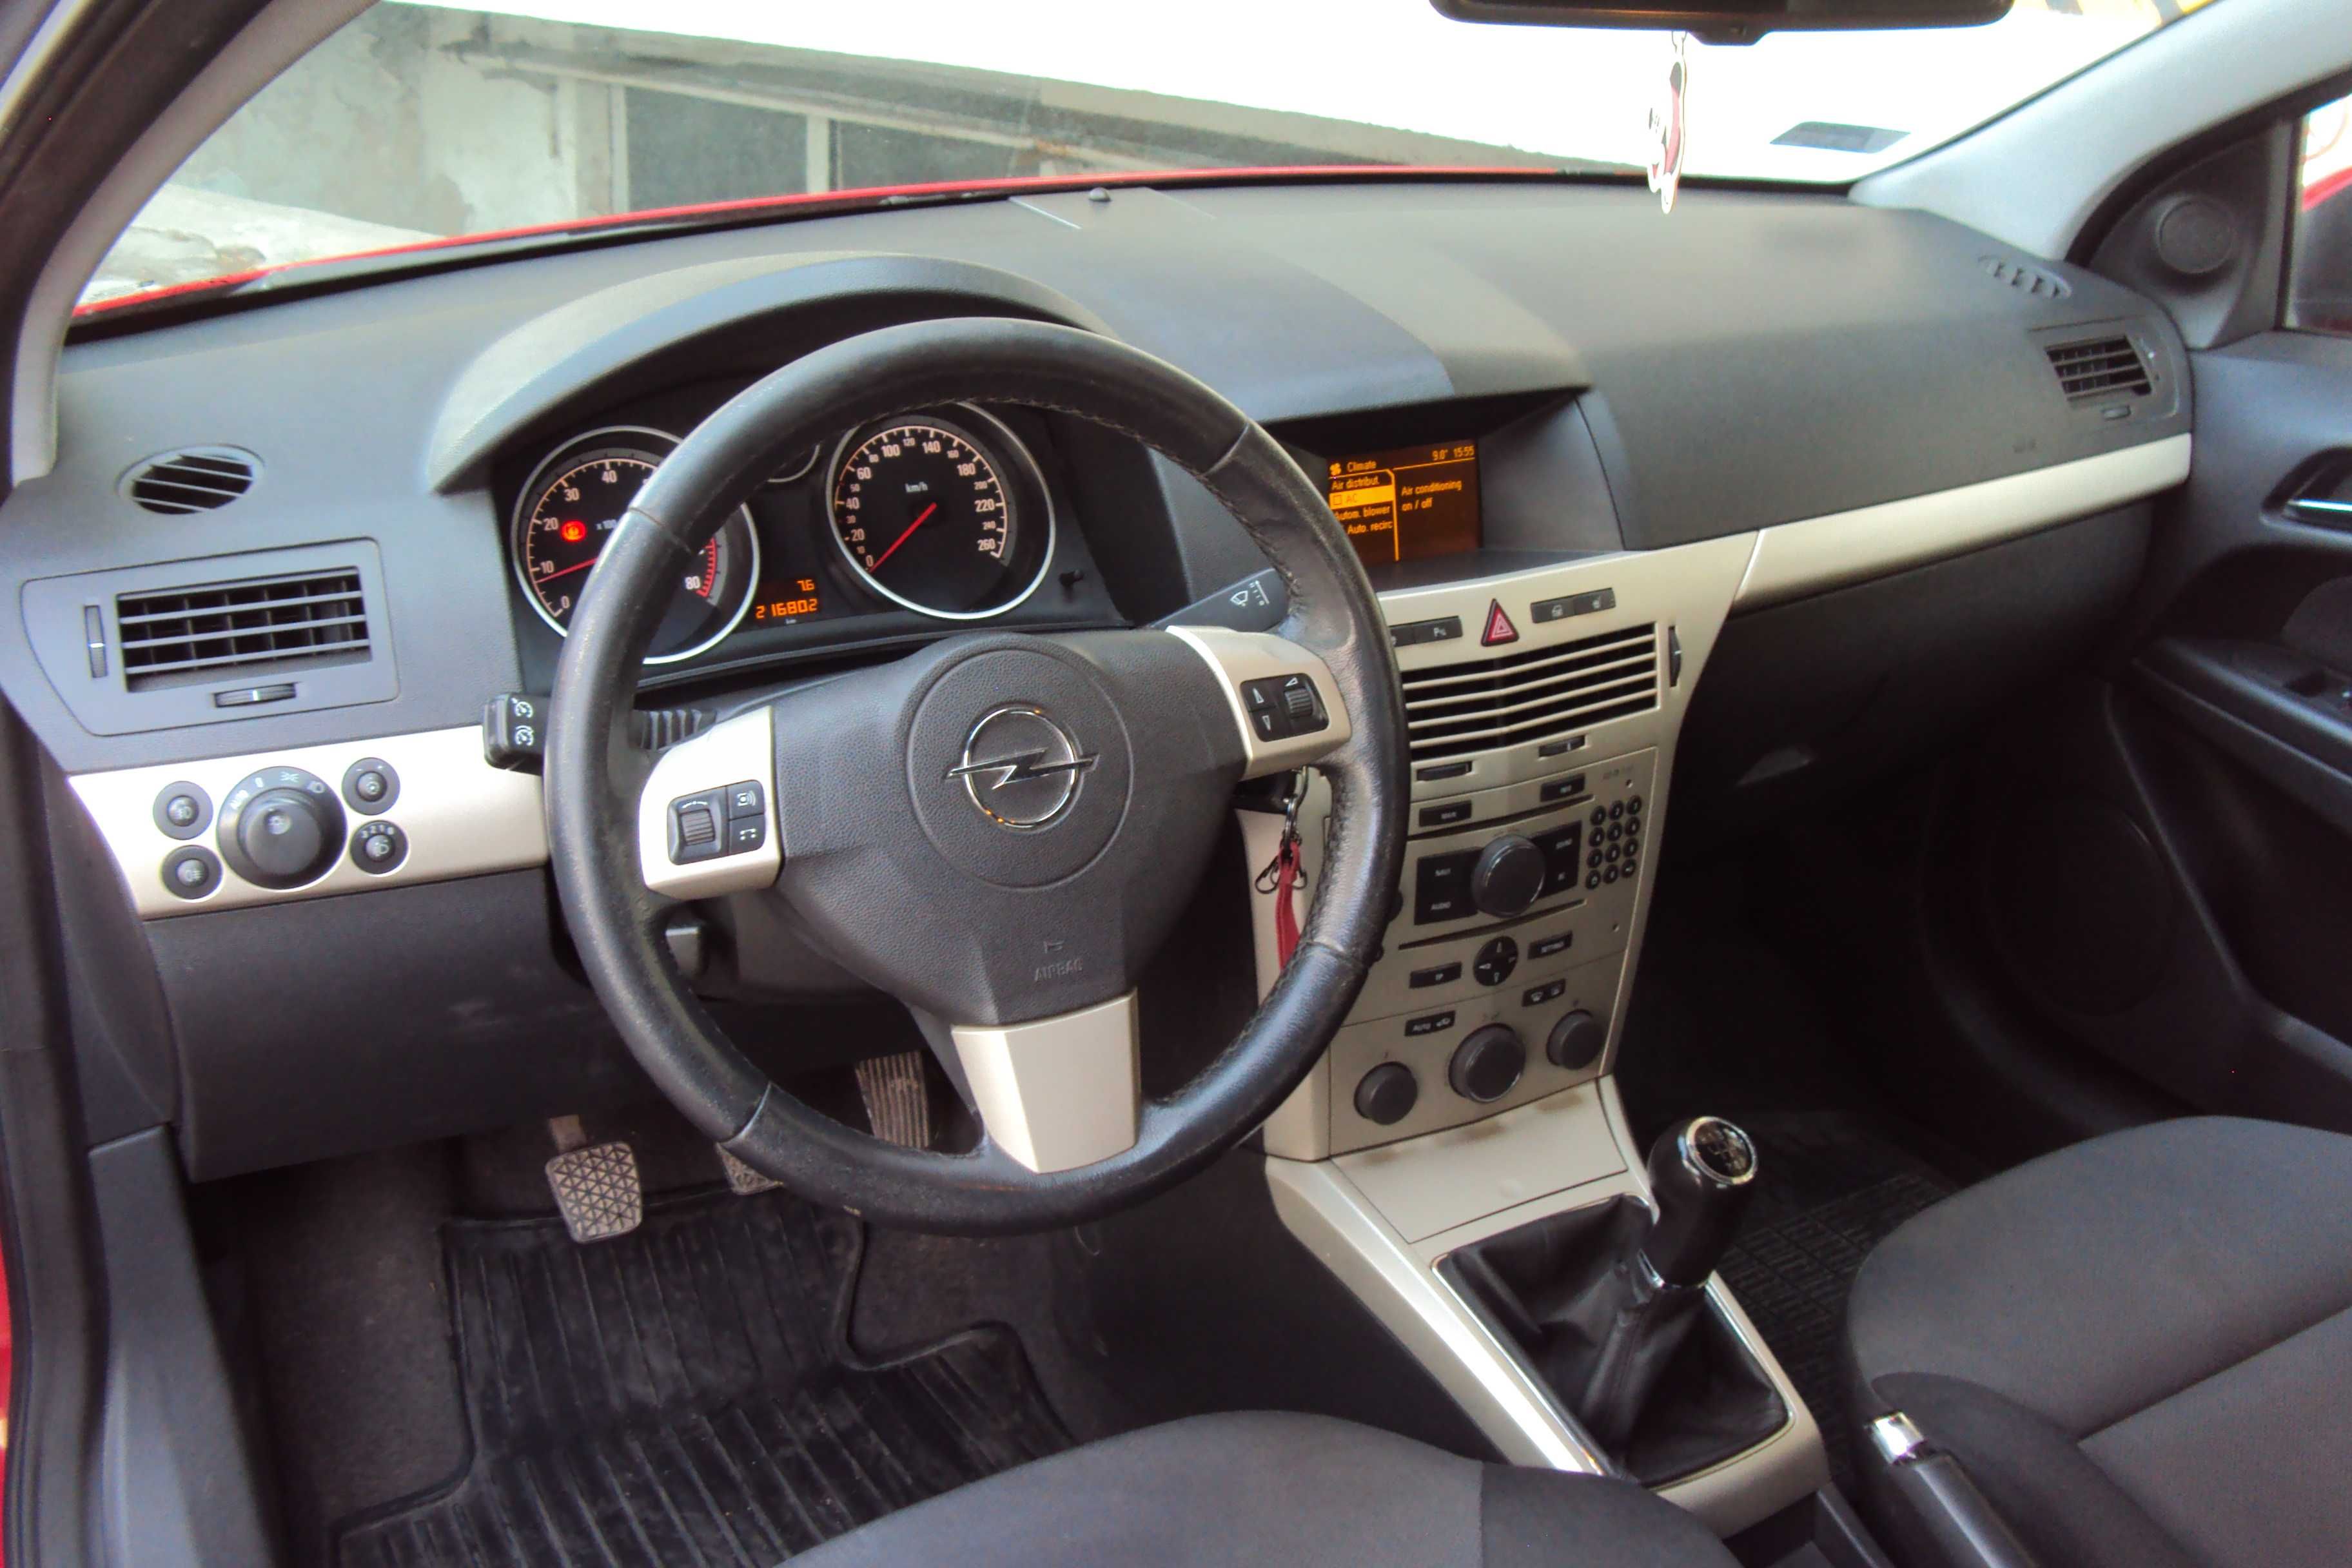 OKAZJA !! ŁADNY Opel Astra GTC 2008r. 1.6 16V SUPER STAN, 1 Właściciel